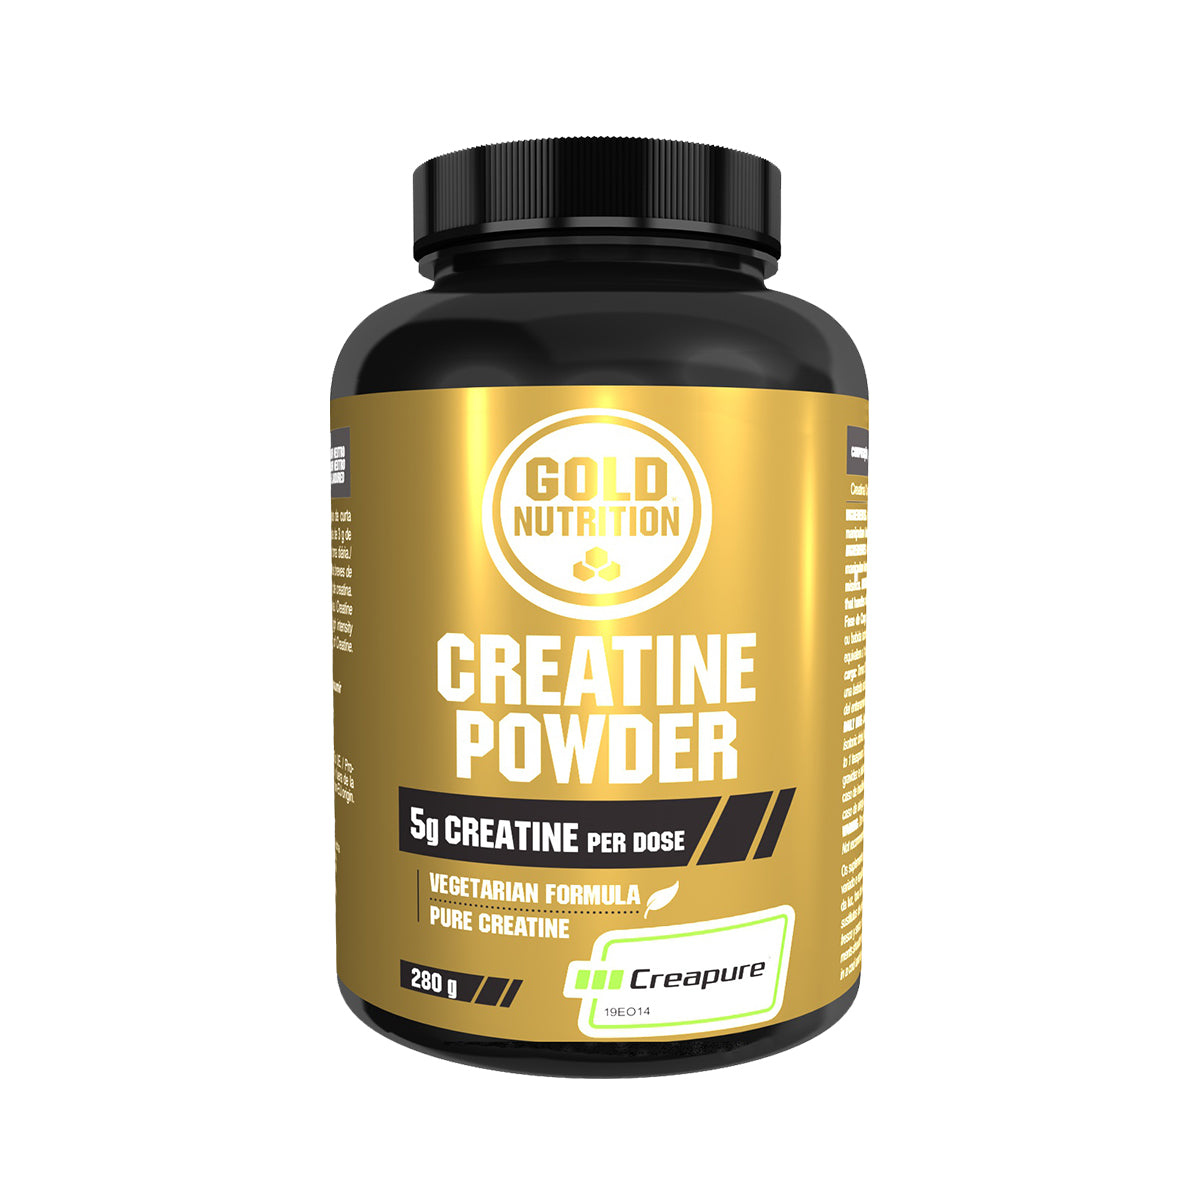 Creatine Powder 260 g - Go Natural